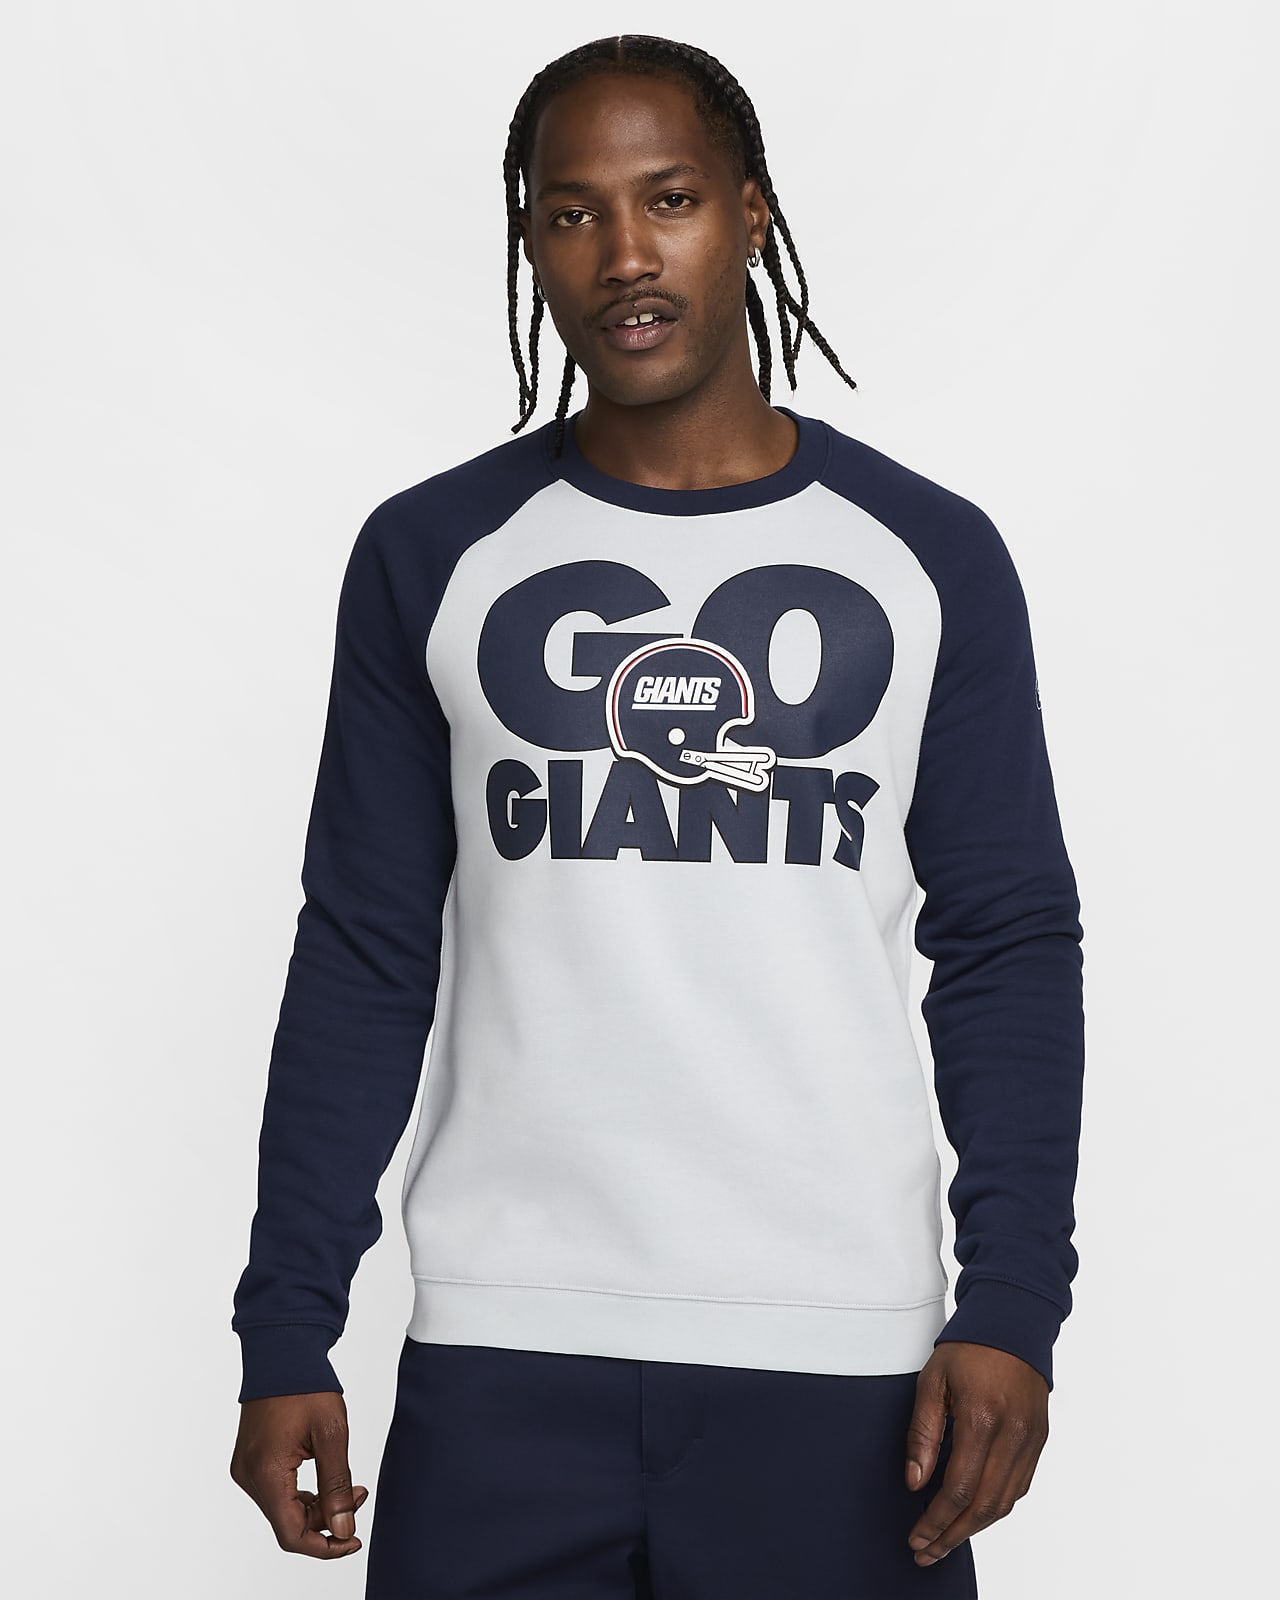 Nike Historic Raglan (NFL Giants) Men's Sweatshirt